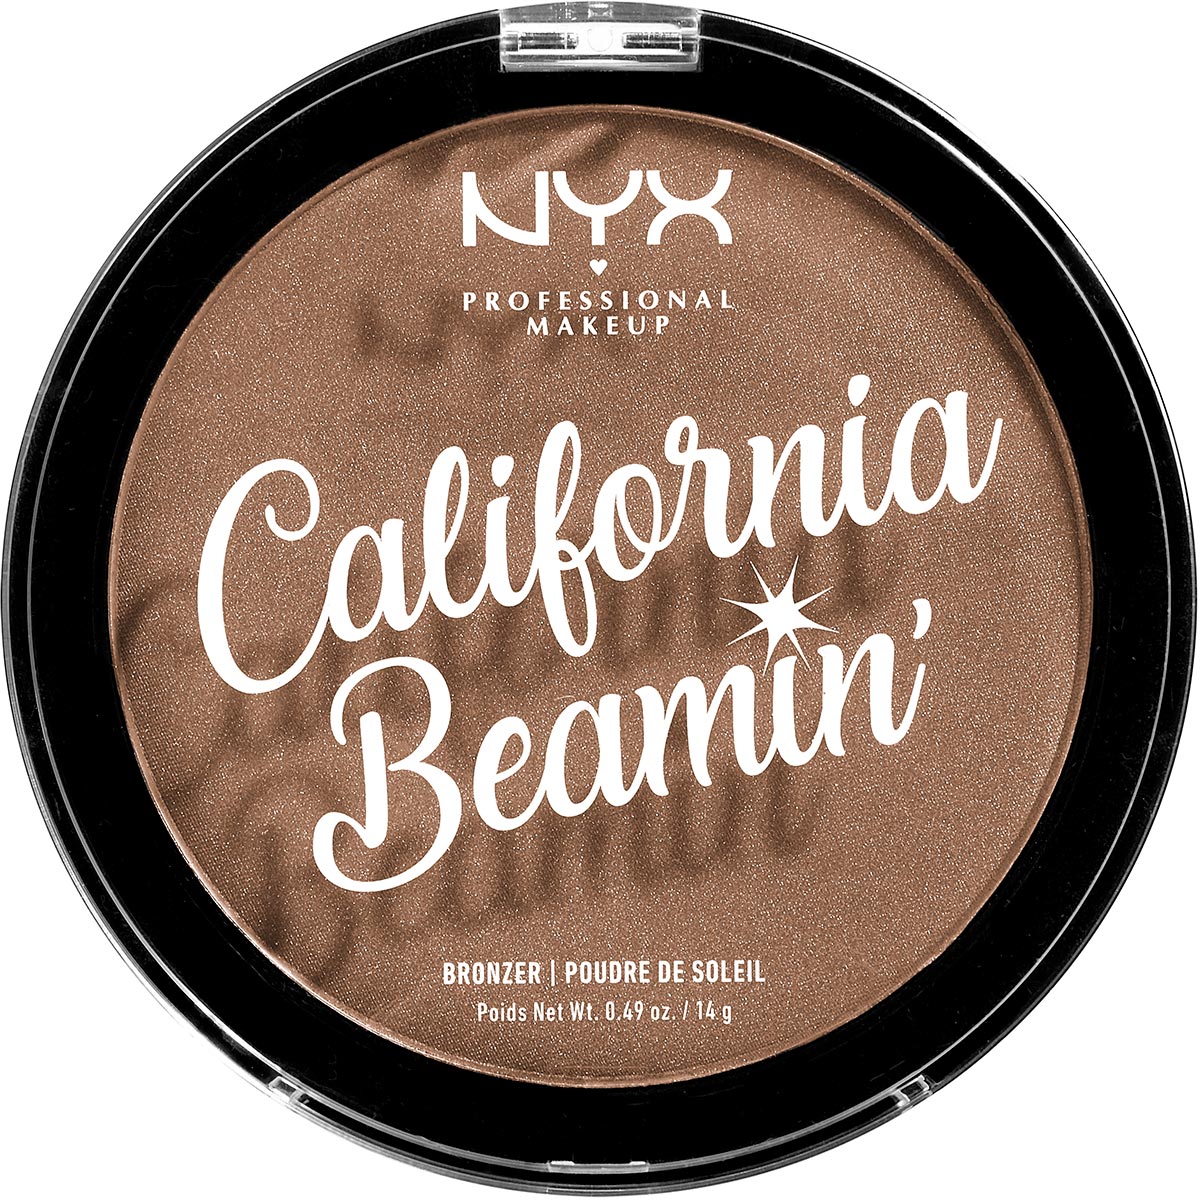 California Beamin’ Face & Body Bronzer NYX Professional Makeup Bronzer